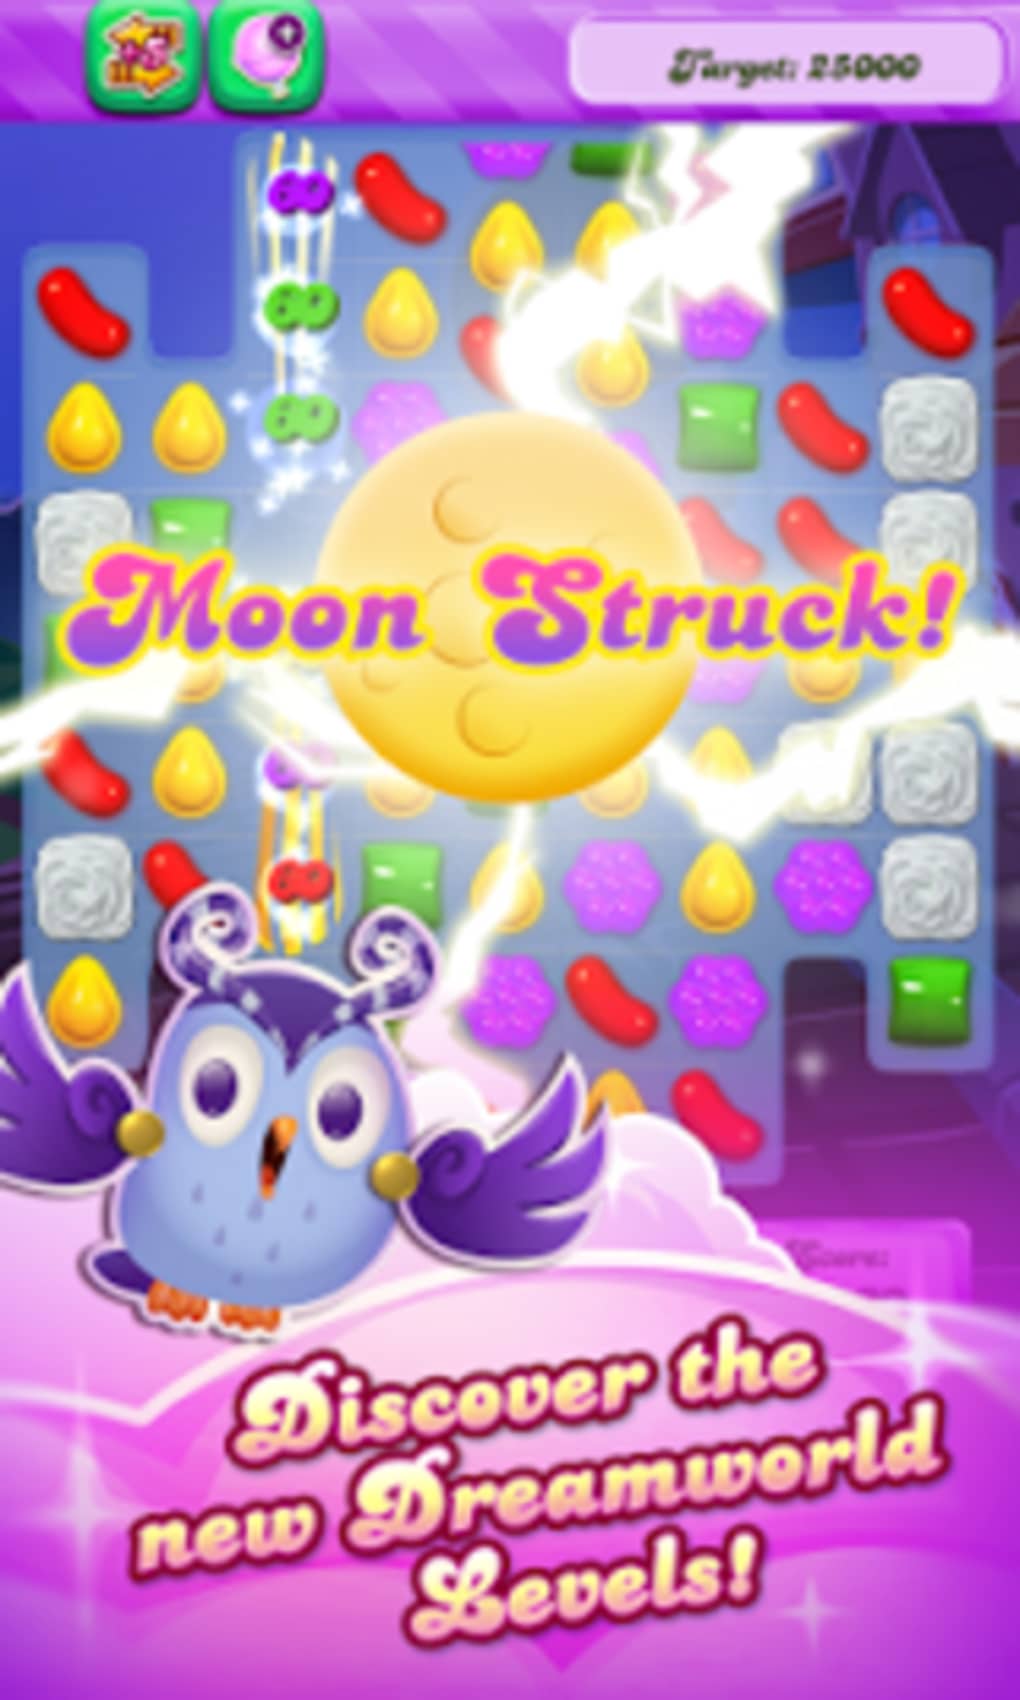 Candy Crush Saga 1.267.0.2 MOD APK (Unlimited Lives) Download